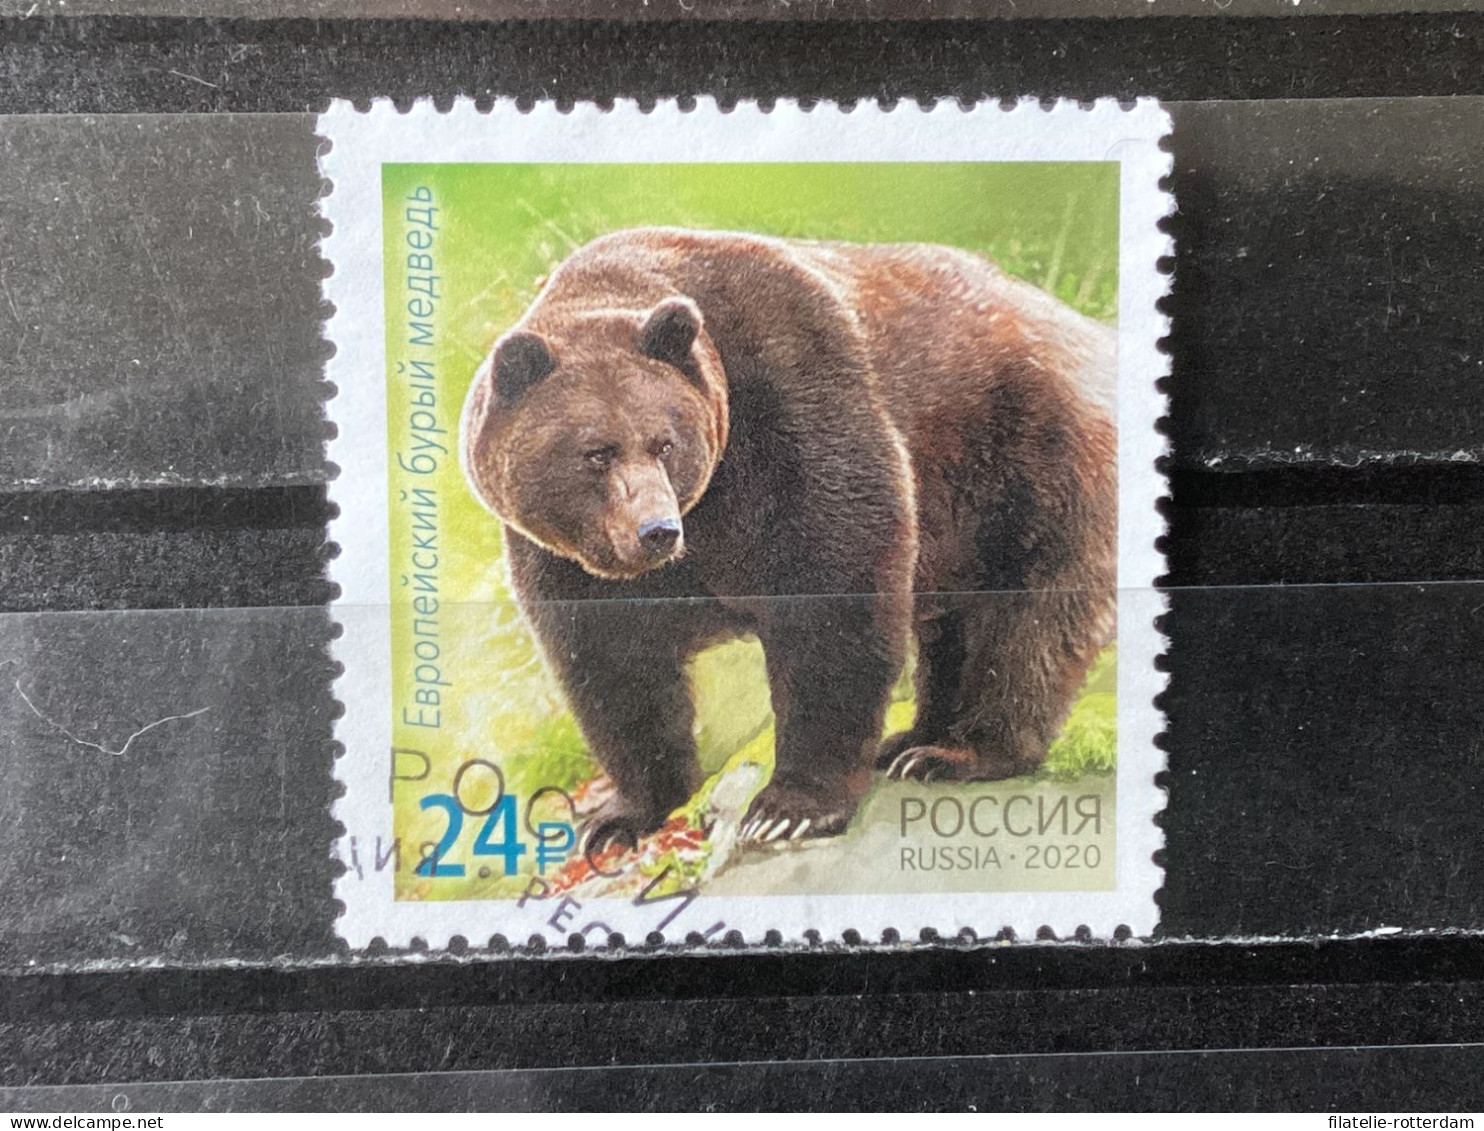 Russia / Rusland - Bears (24) 2020 - Gebruikt